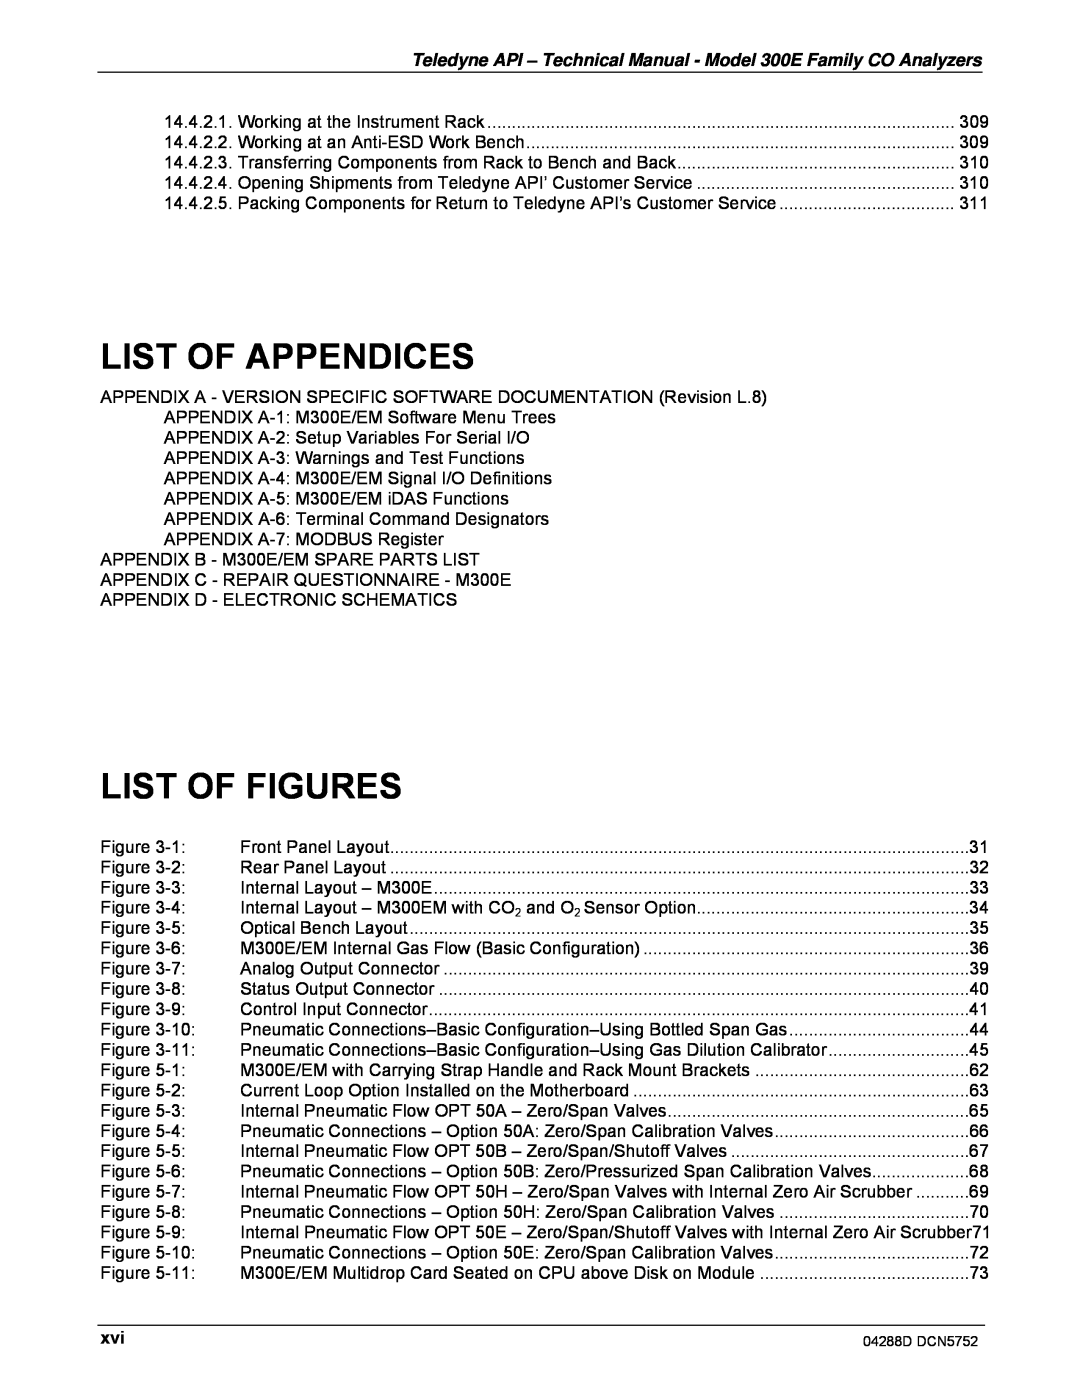 Teledyne M300EM operation manual List Of Appendices, List Of Figures 